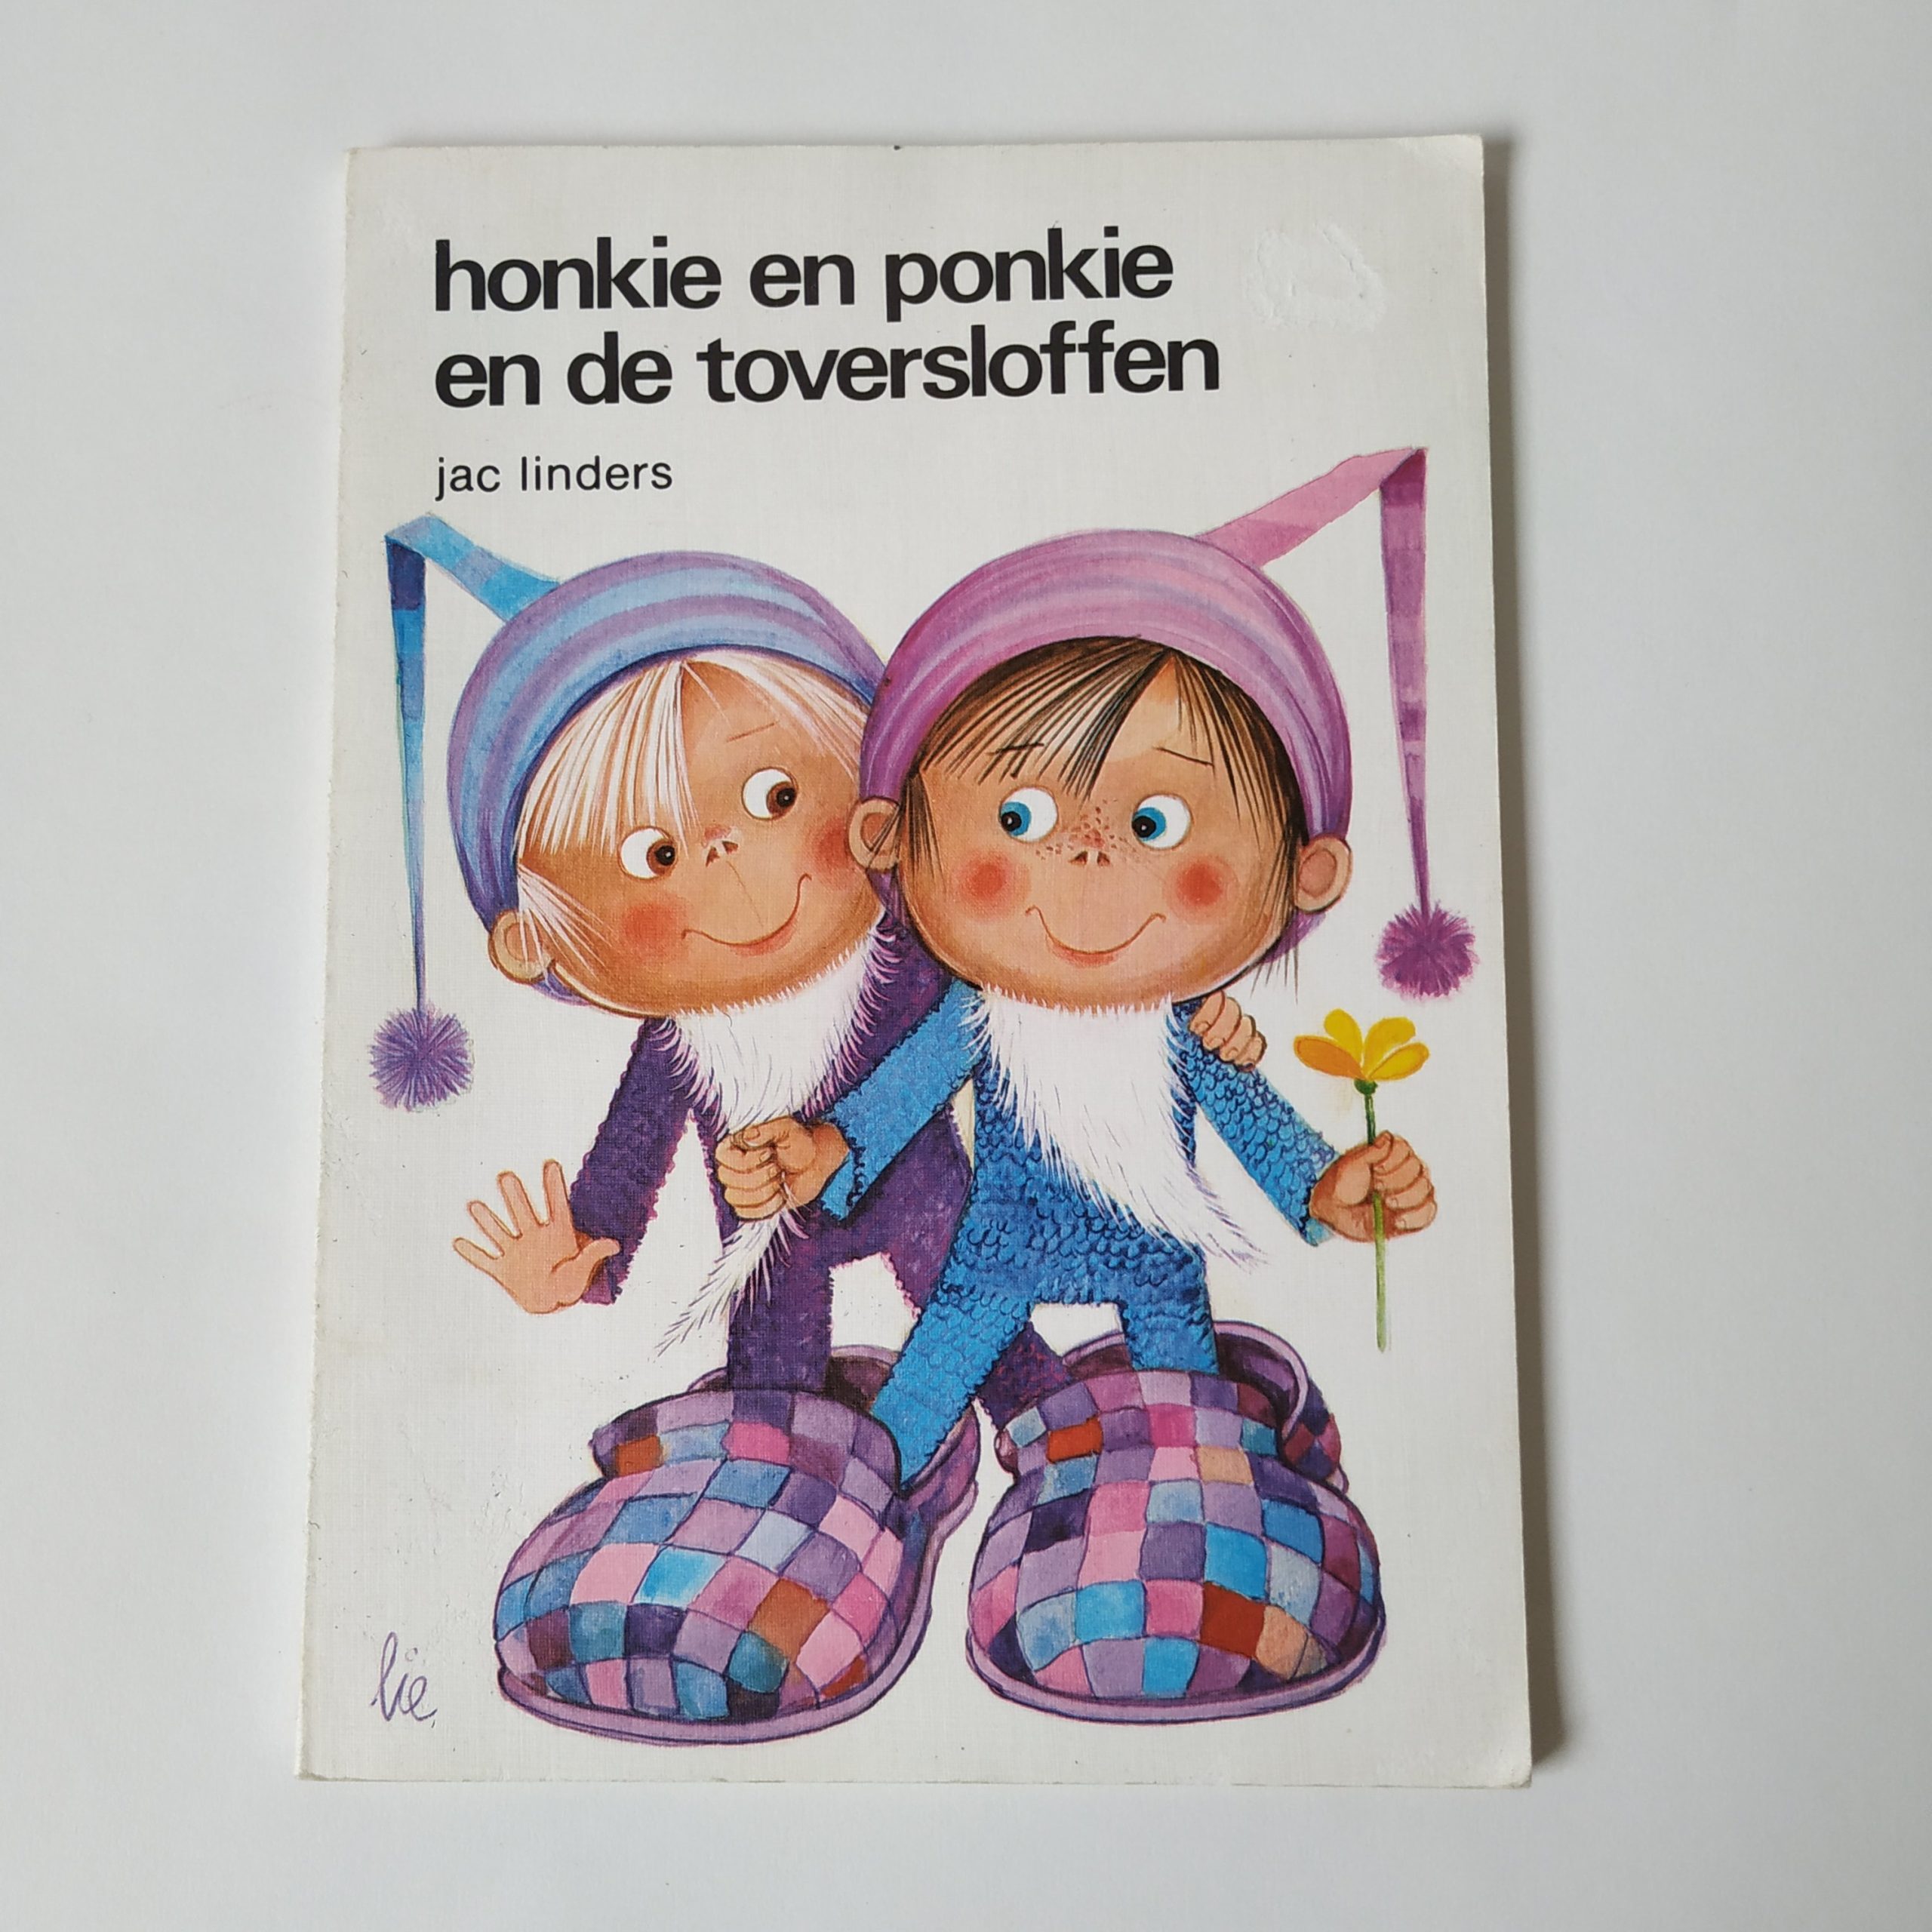 Vintage boek Honkie en Ponkie en de toversloffen uit 1978